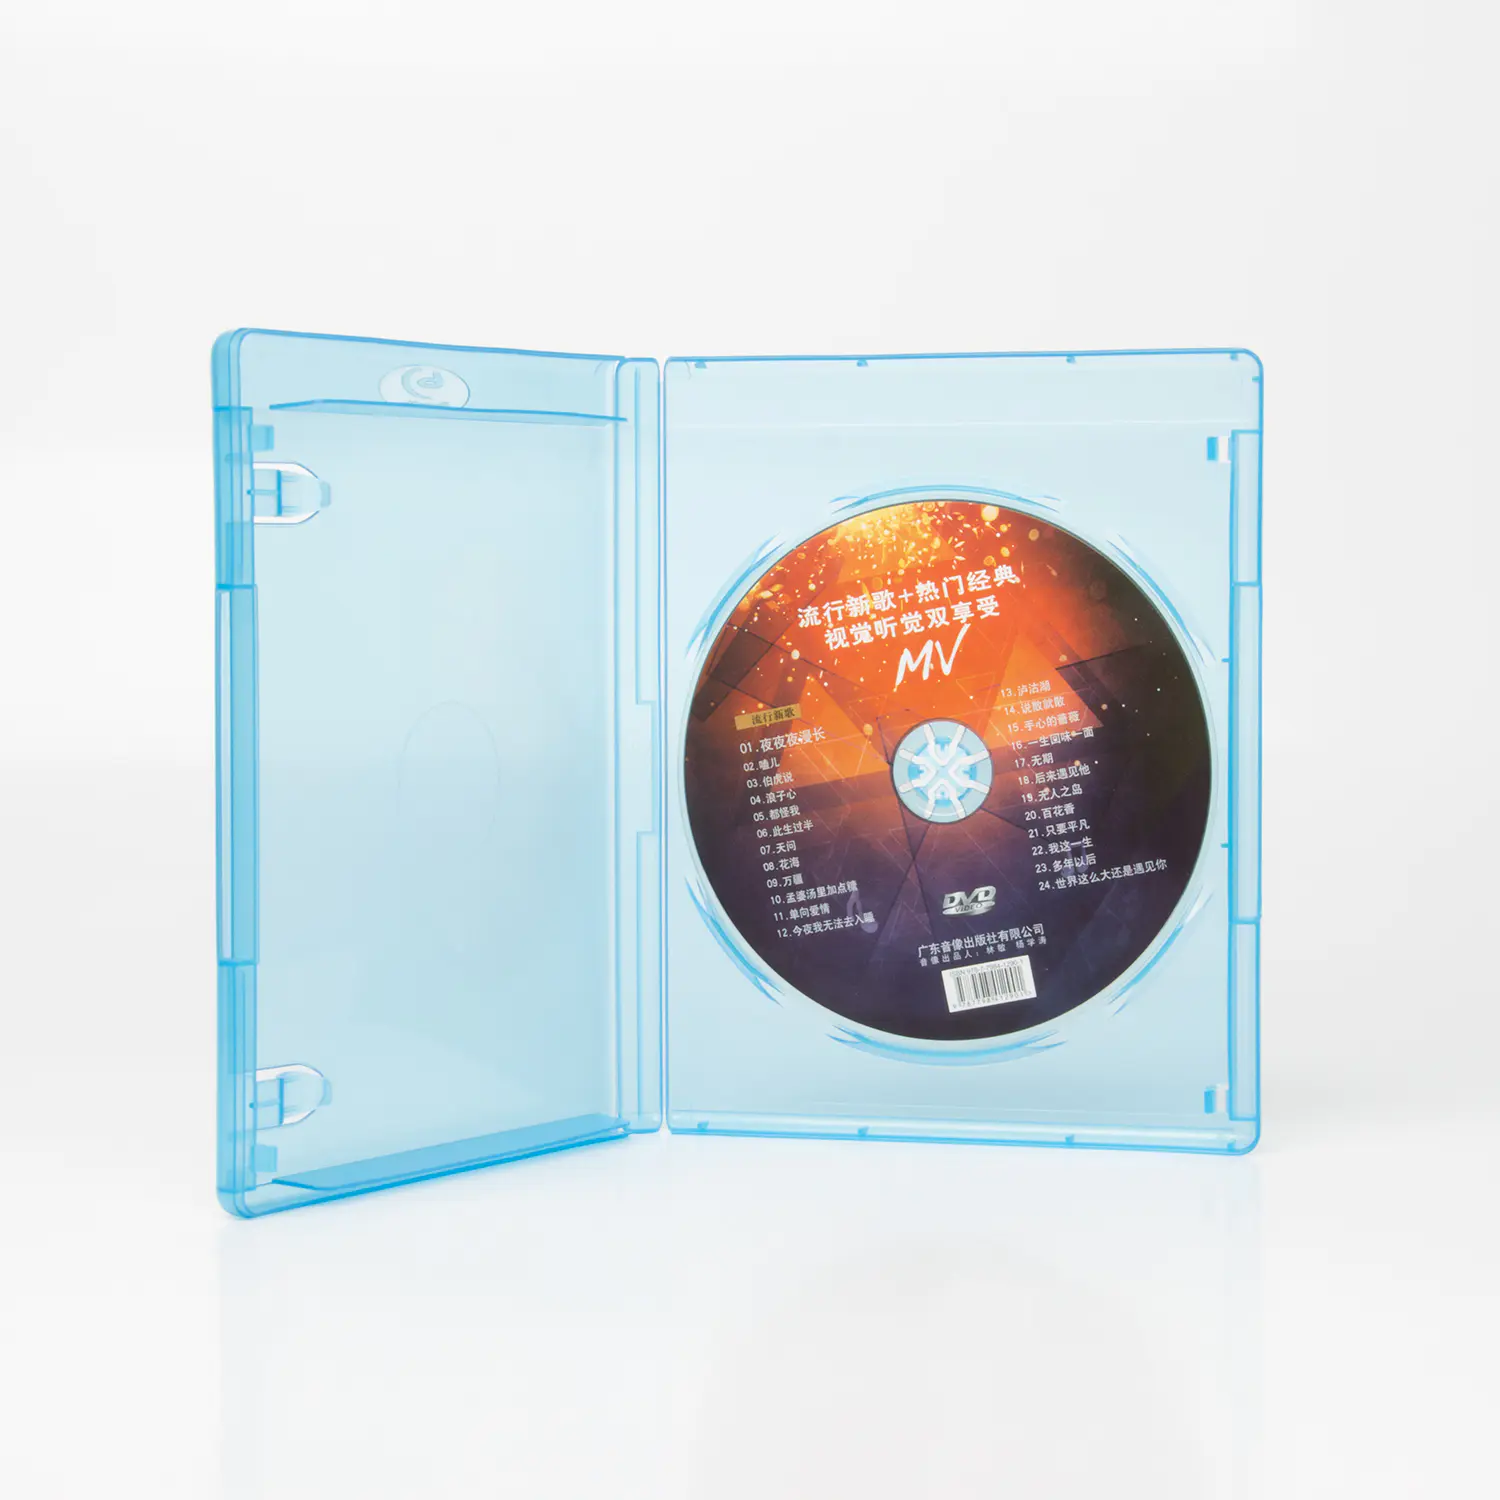 Kotak Dvd Ps4 /Case Box Original